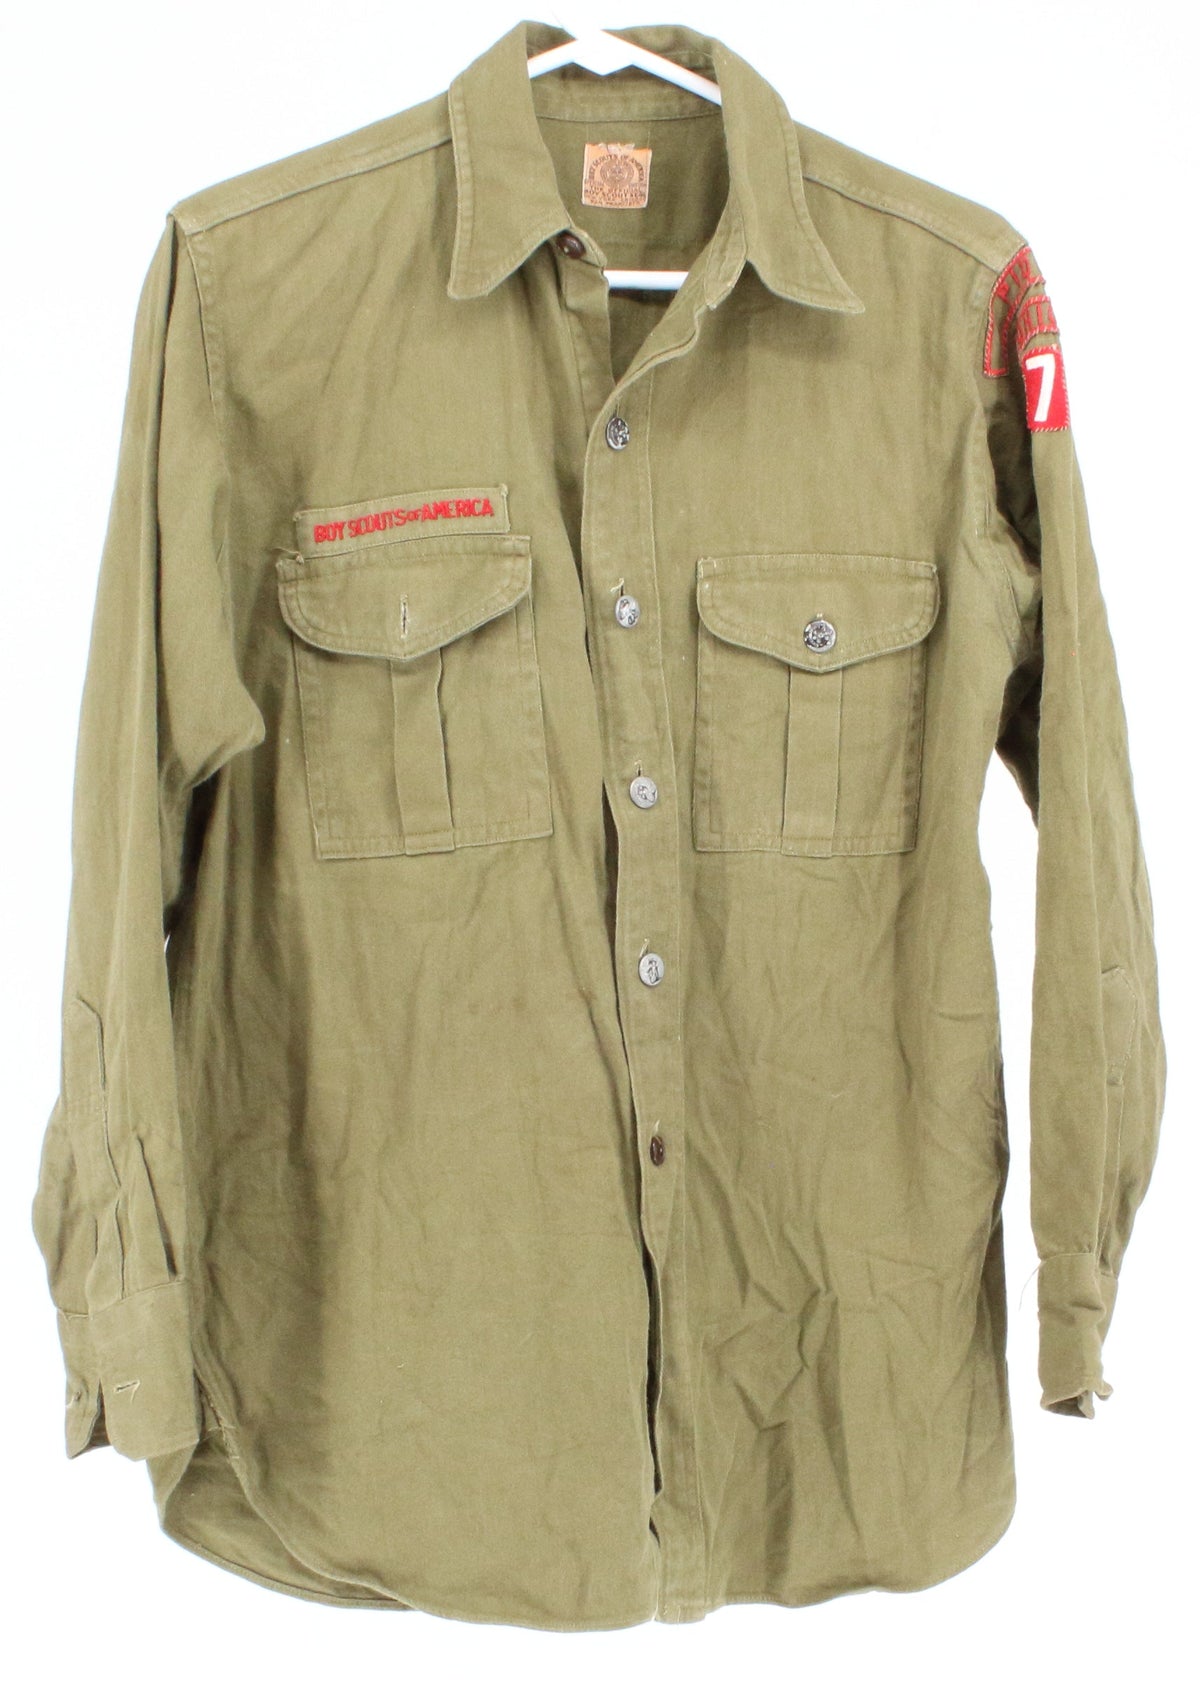 Boy Scouts Of America 7 Khaki Button Up Uniform Shirt